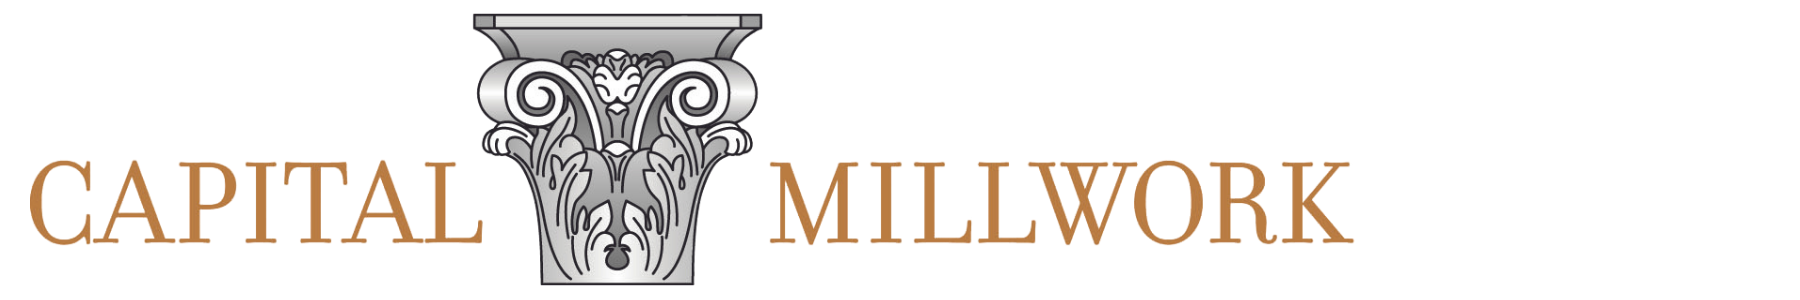 Capital Millwork Logo